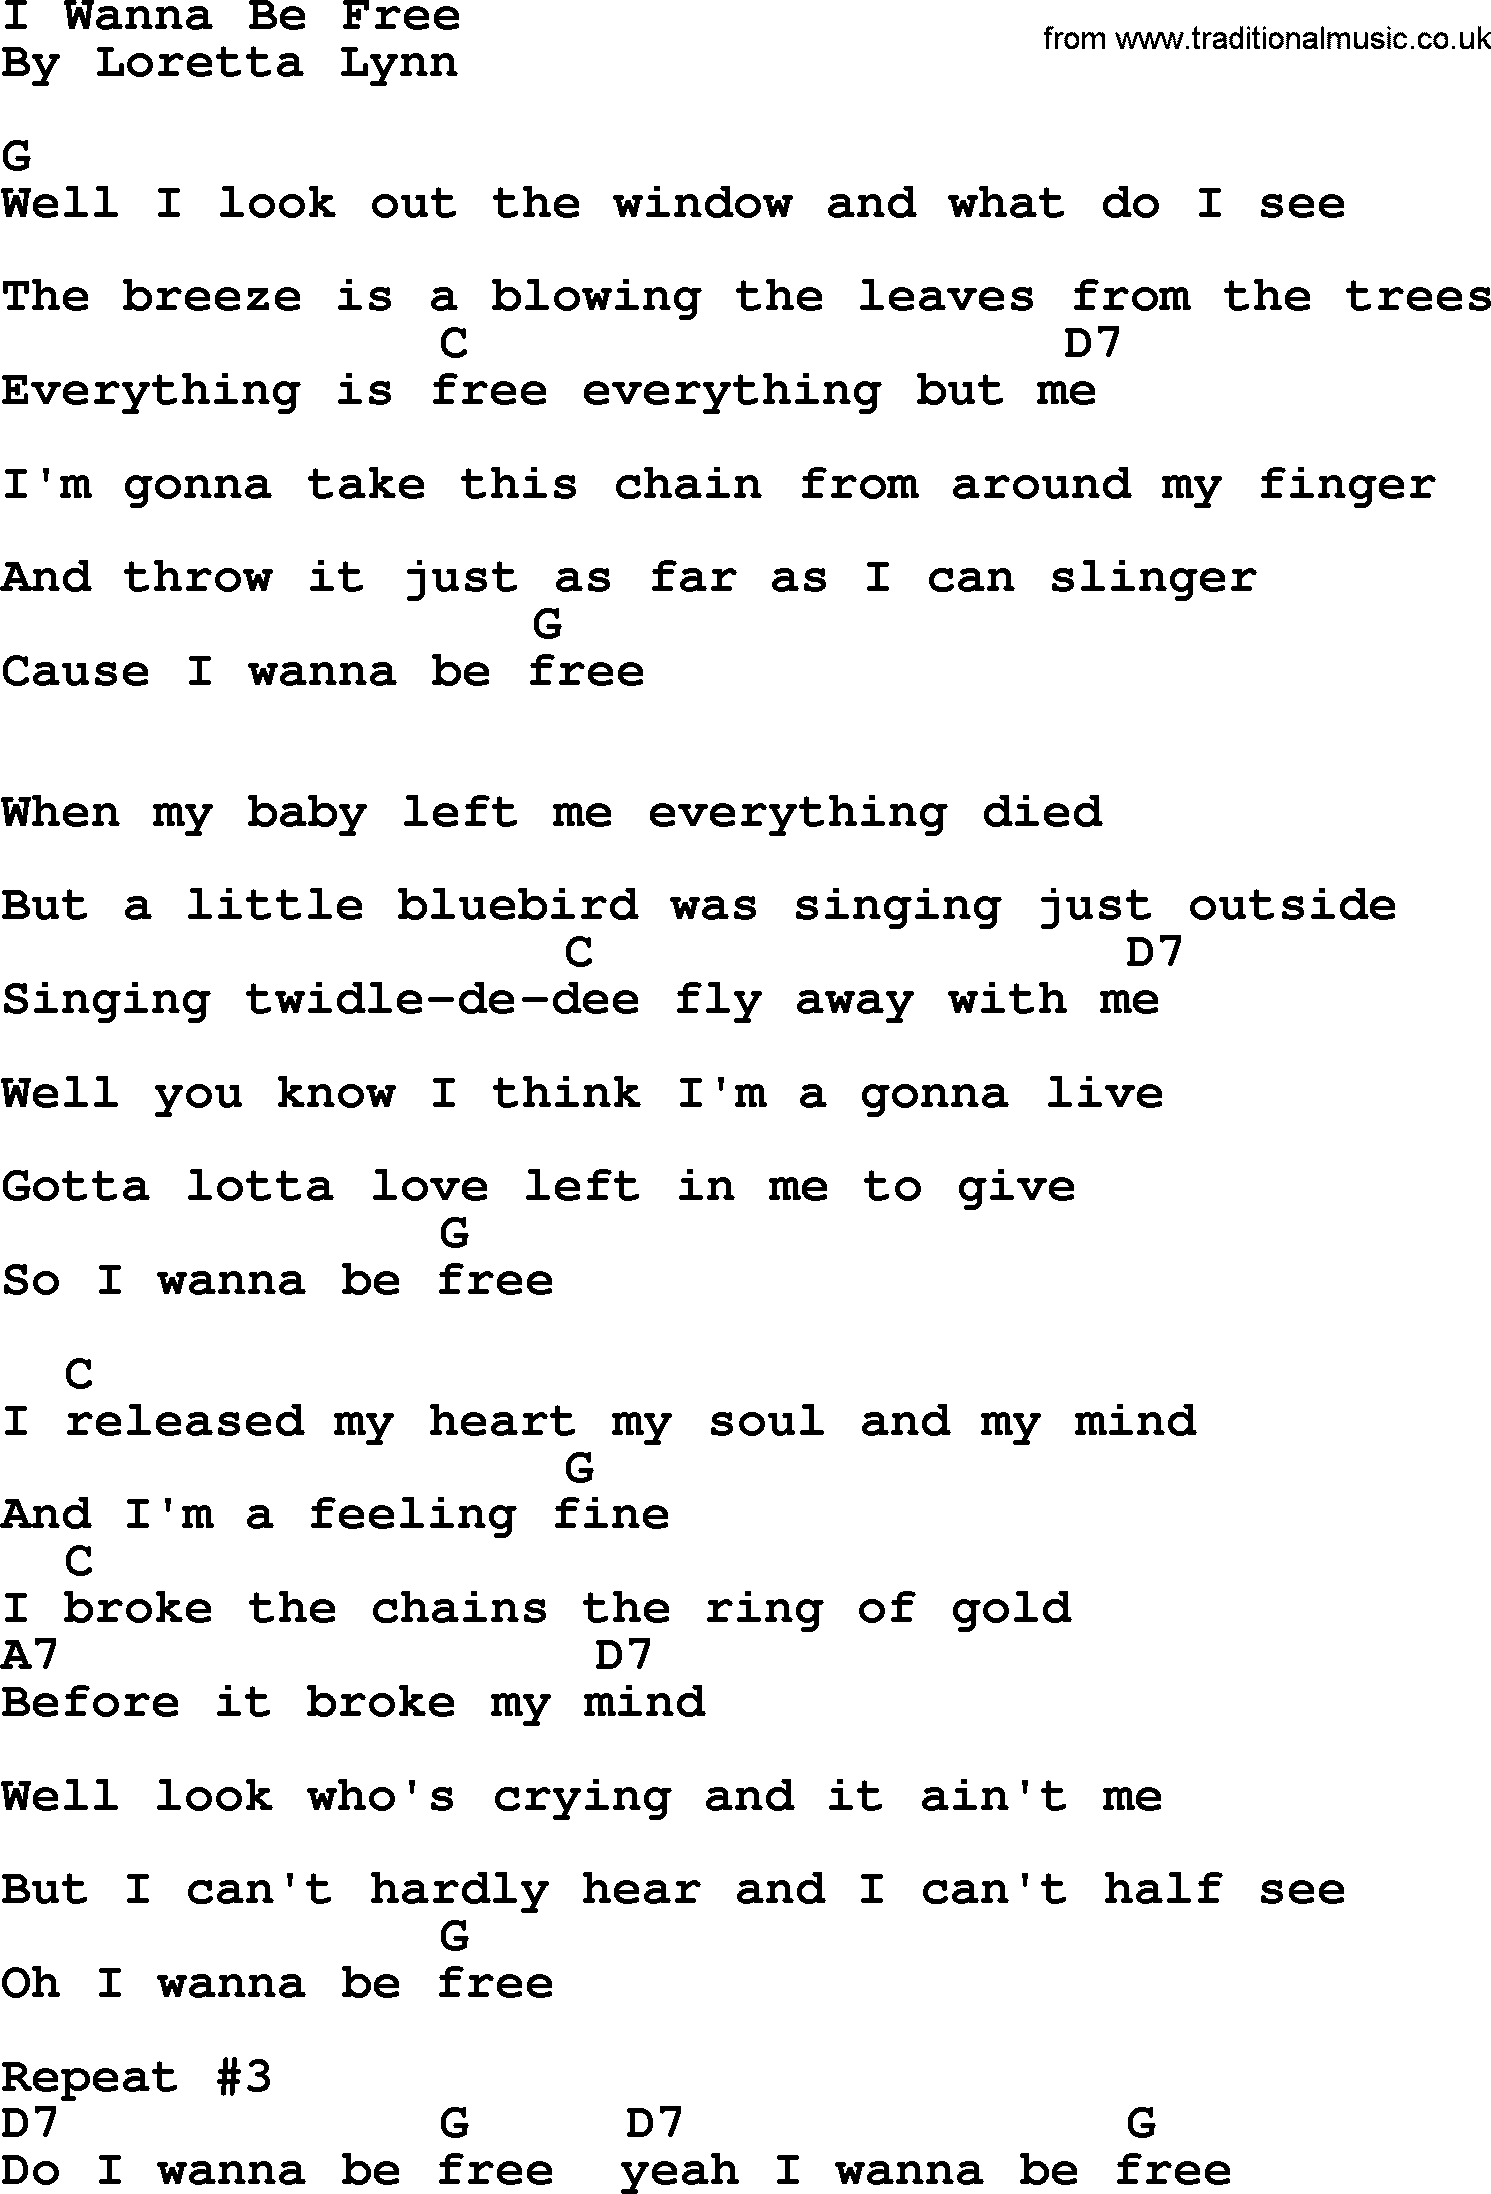 Loretta Lynn song: I Wanna Be Free lyrics and chords